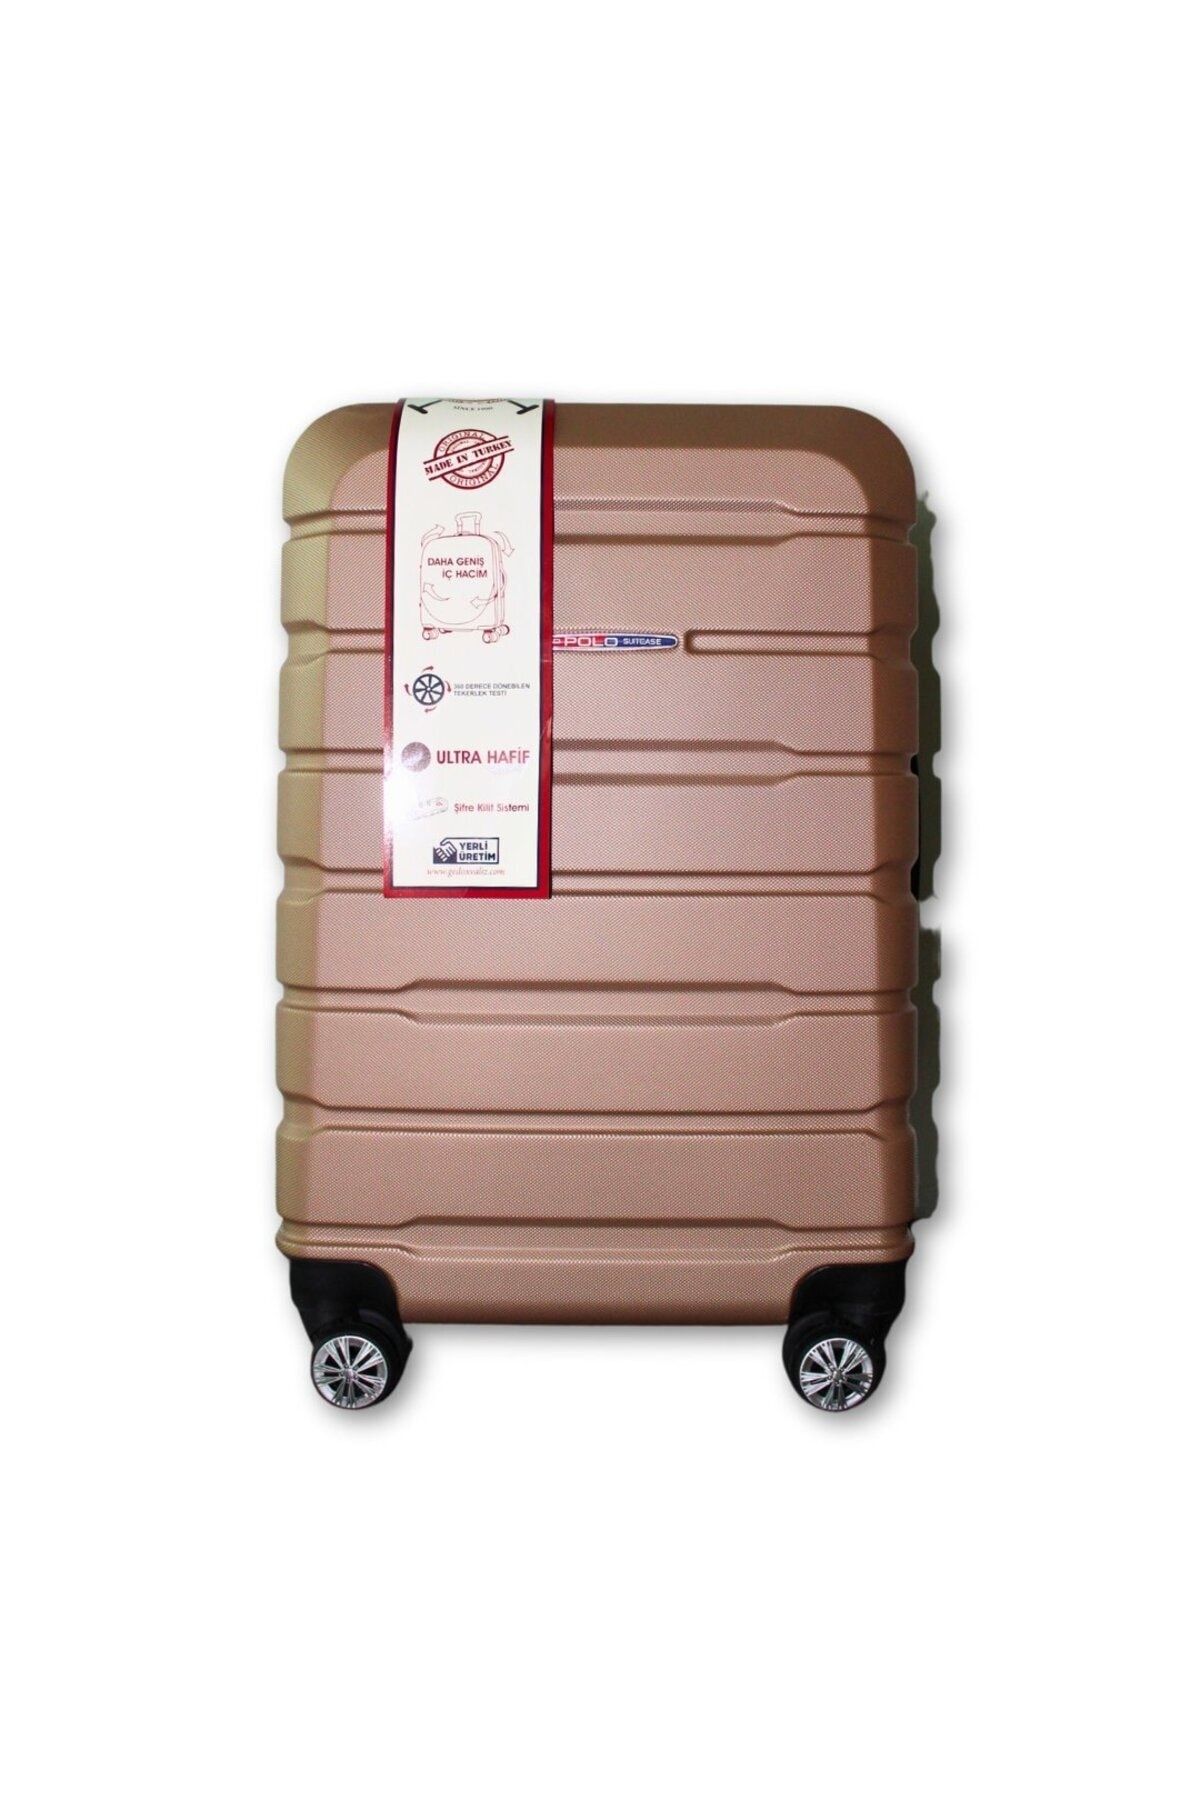 Miniso ABS Bavul Kahve Orta Boy